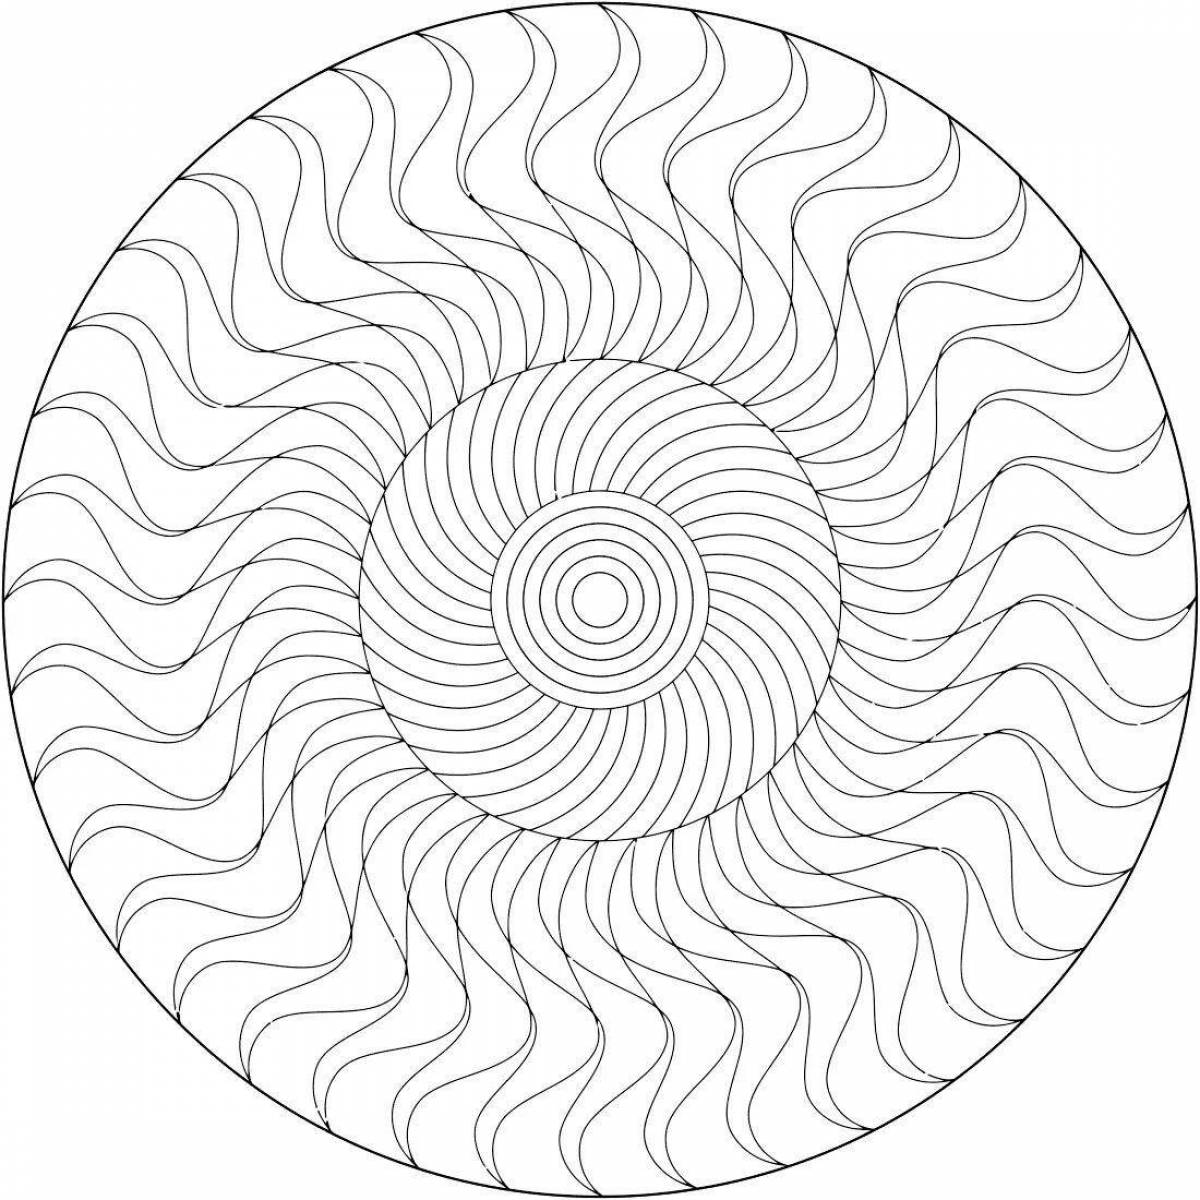 Fun spiral coloring